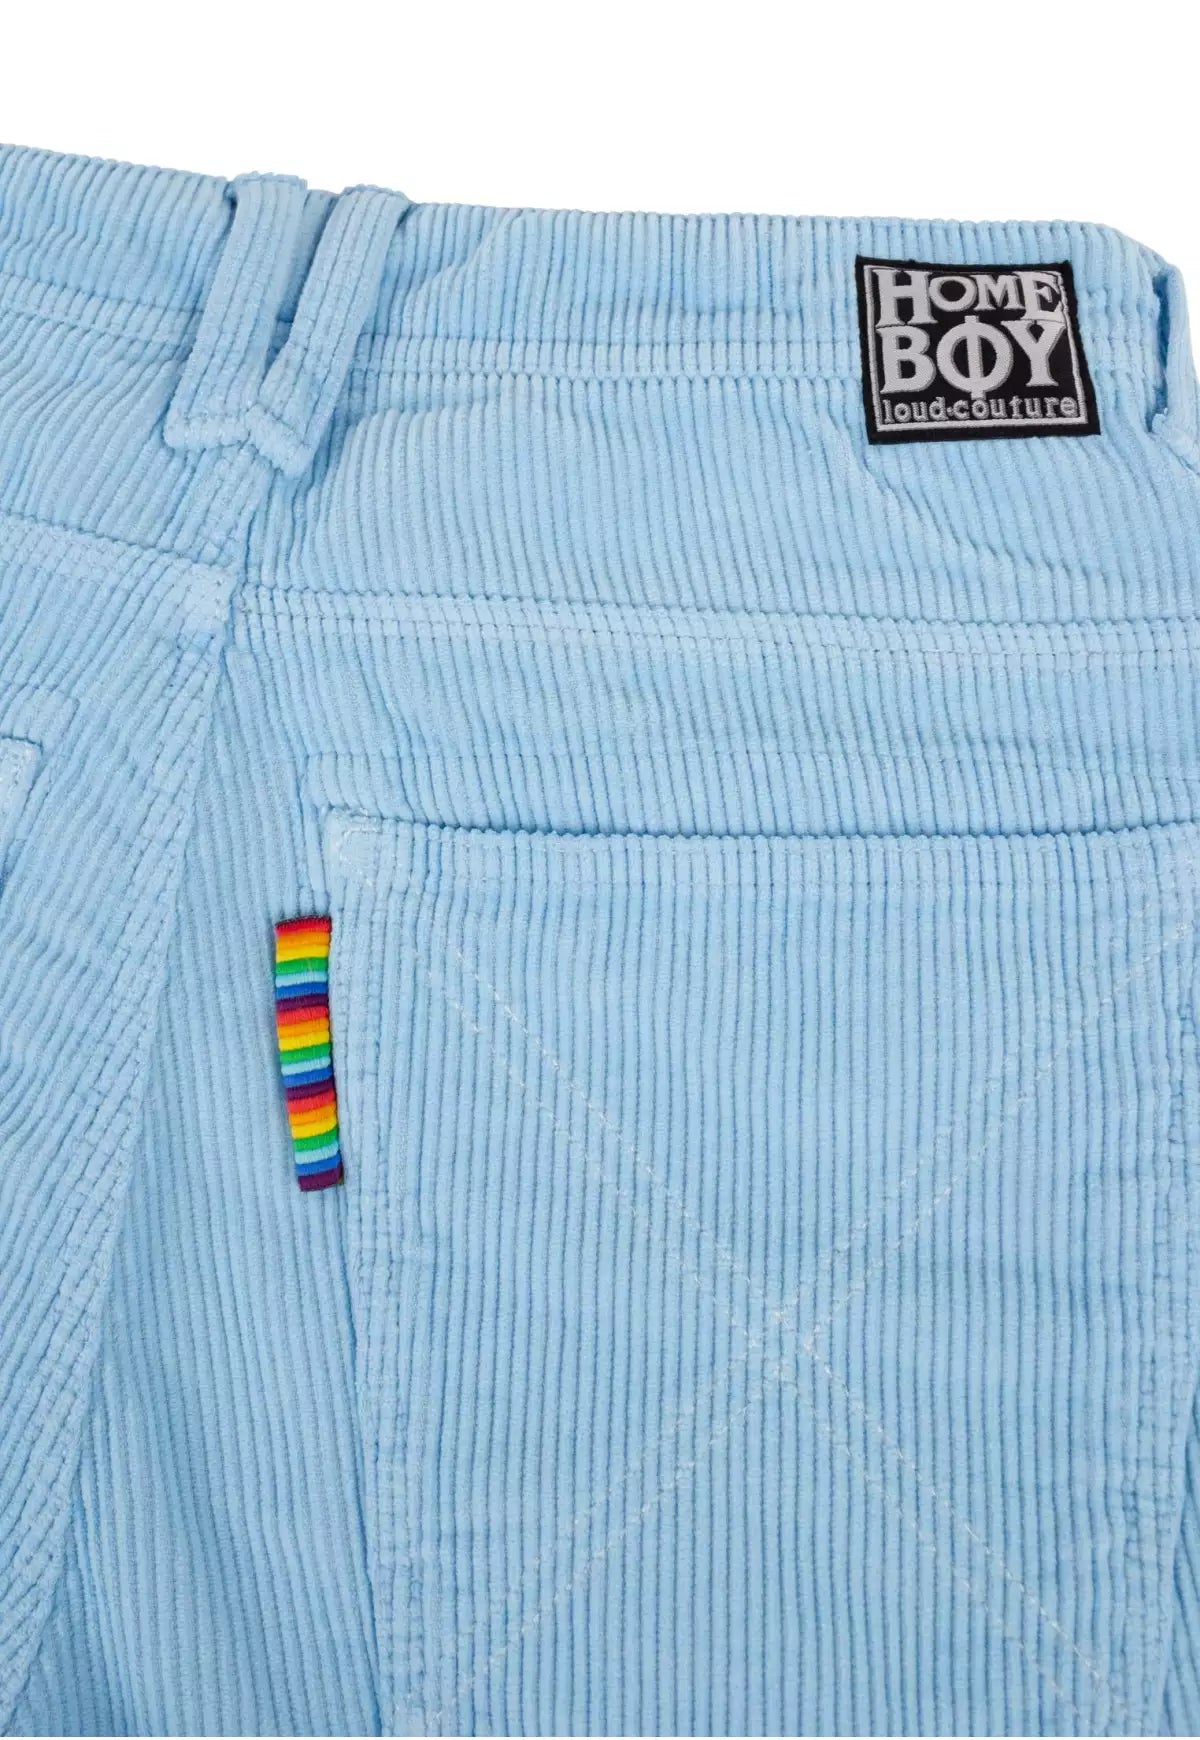 HOMEBOY - X-TRA BAGGY CORD SHORT - POOL BLUE